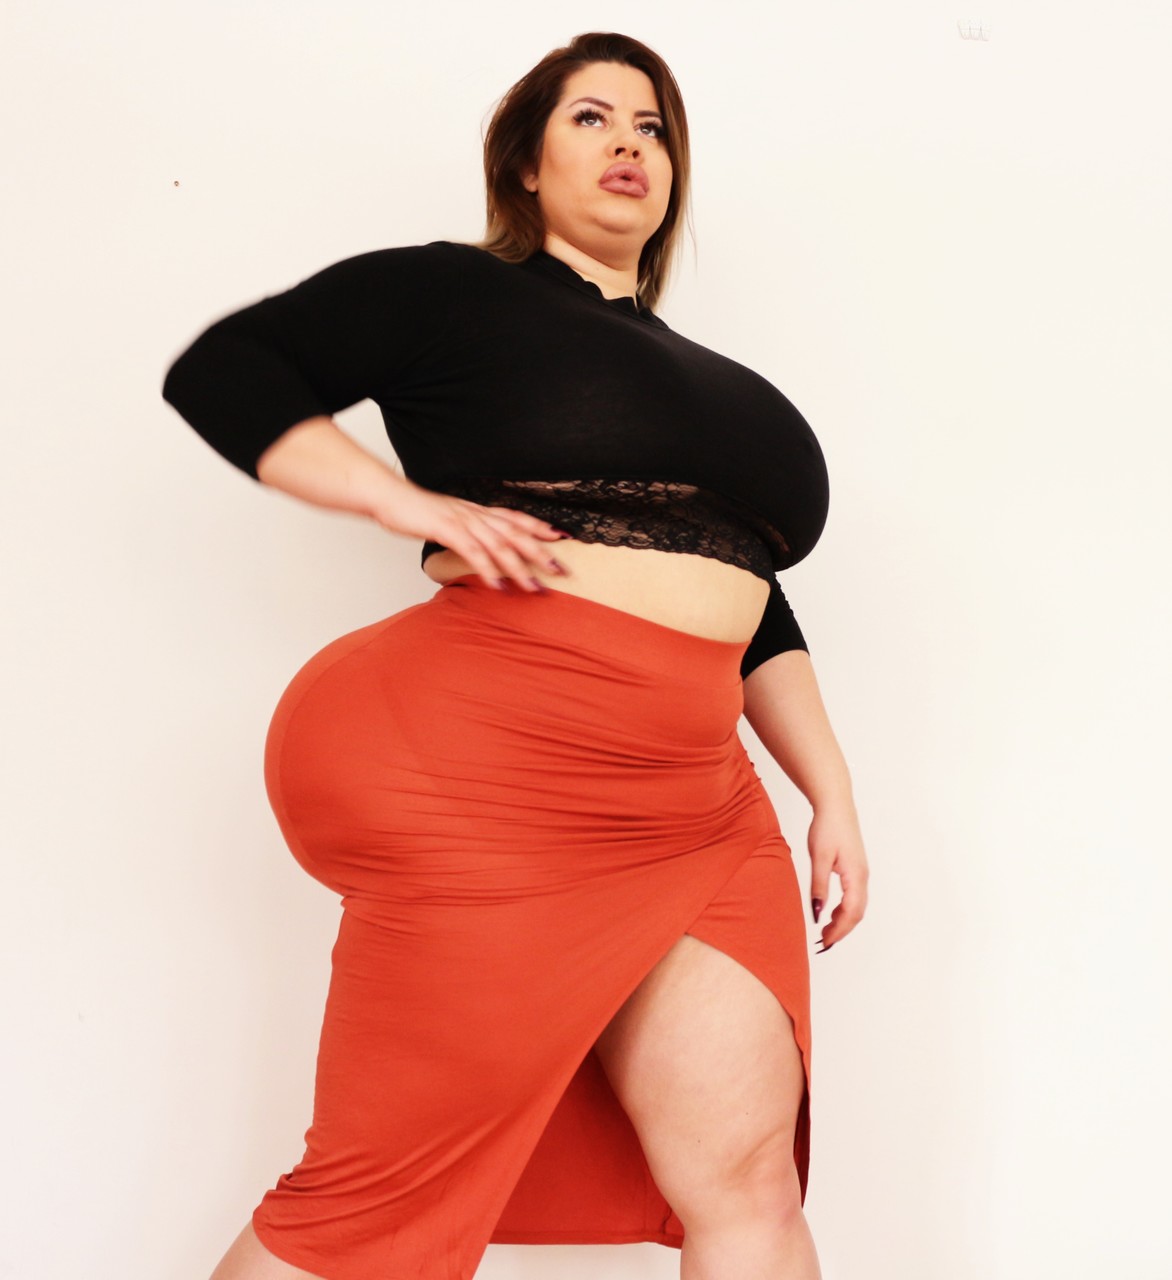 Stunning MILF fatty Natasha Crown flaunting her very big ass in a tight skirt foto porno #423816654